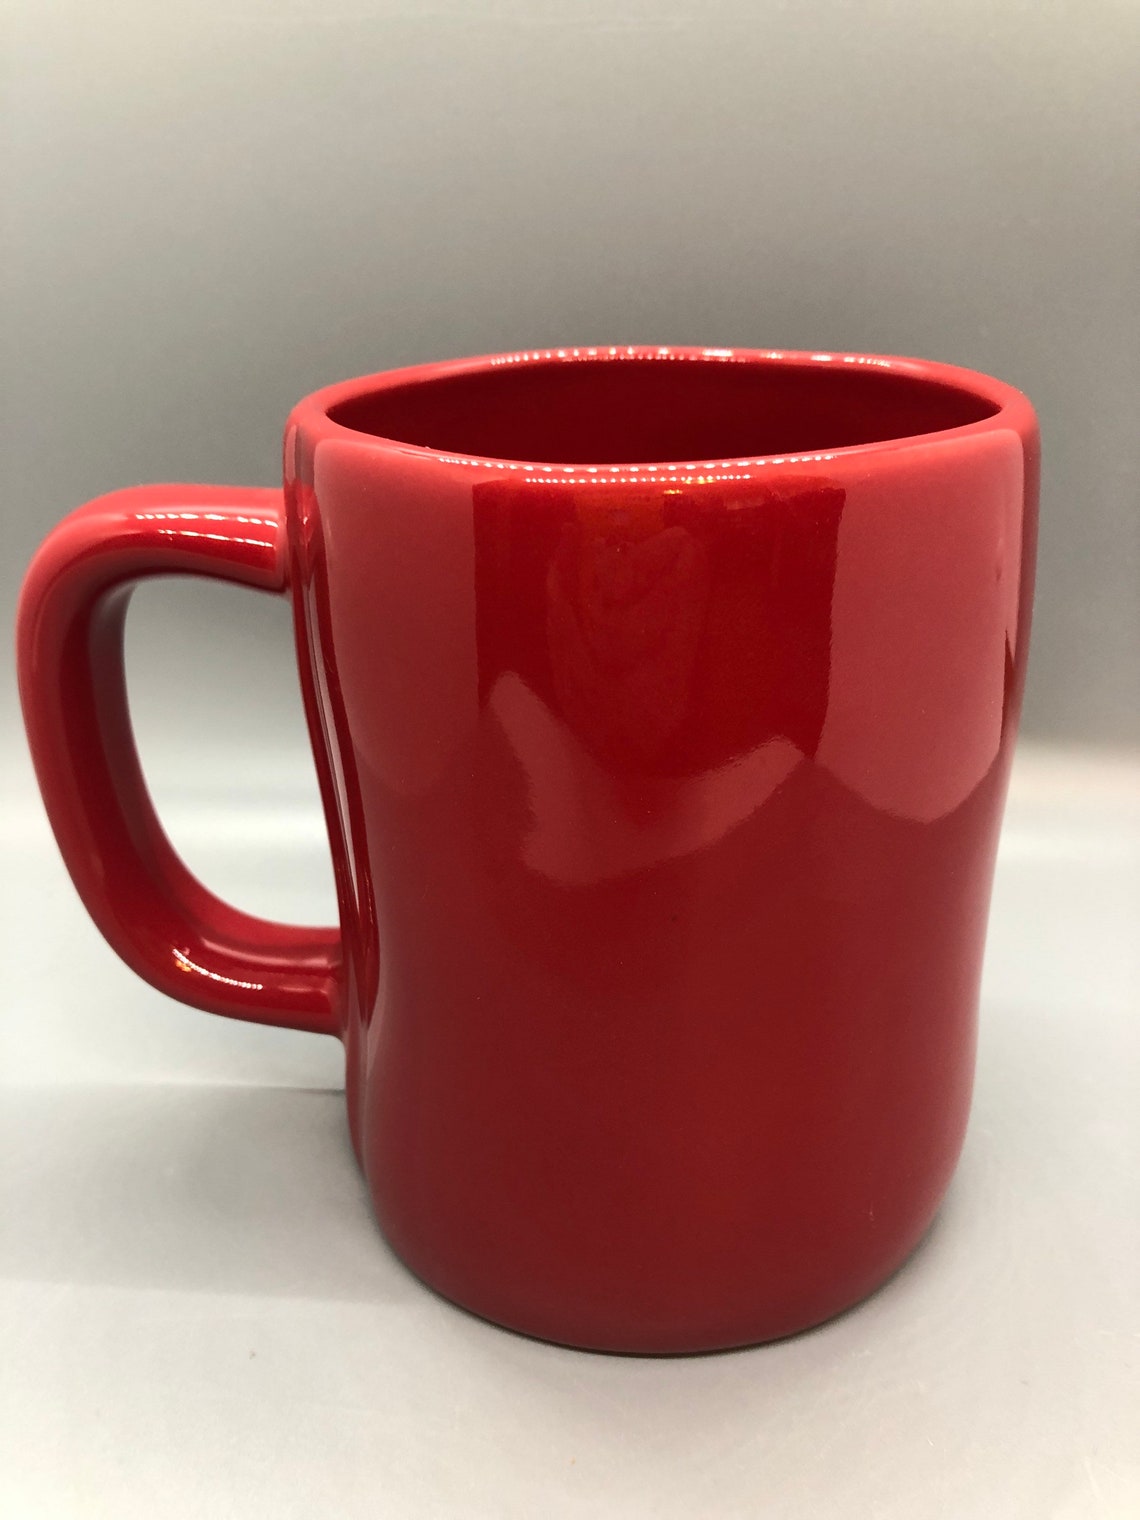 Rae Dunn red ceramic Cheer mug | Etsy